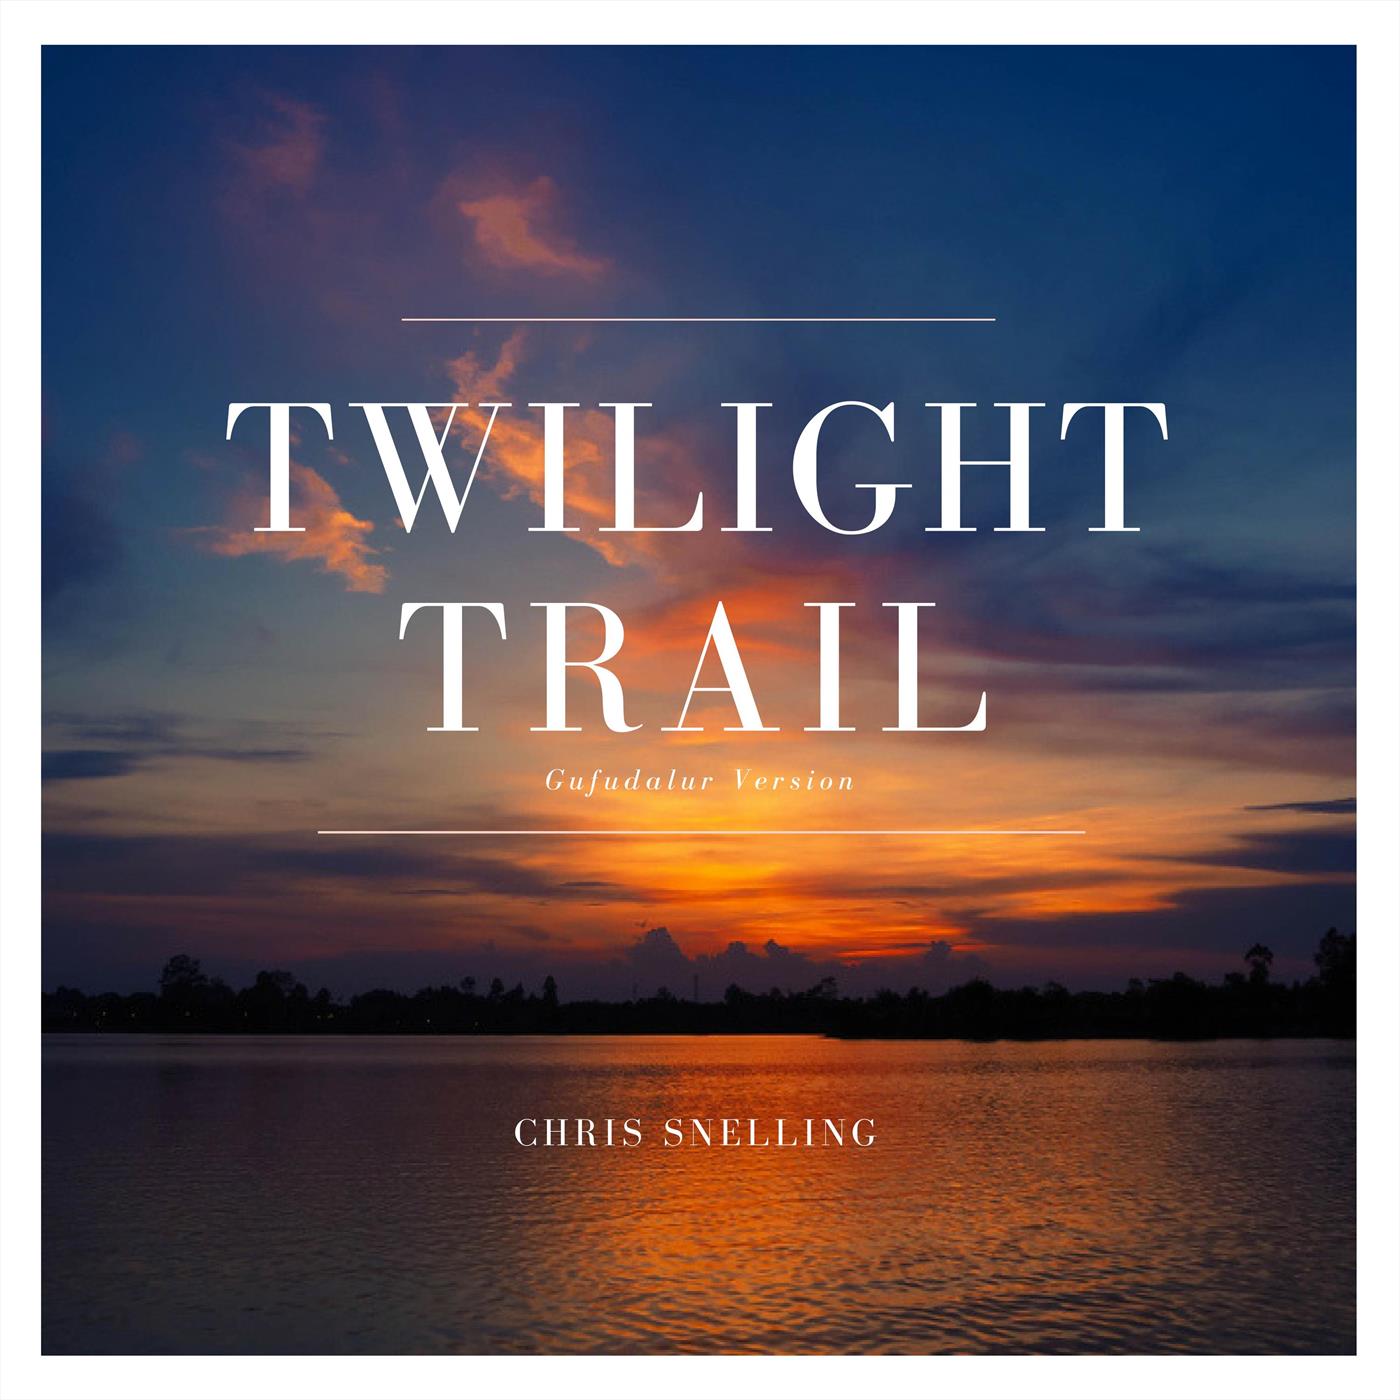 Twilight Trail (Gufudalur Version)